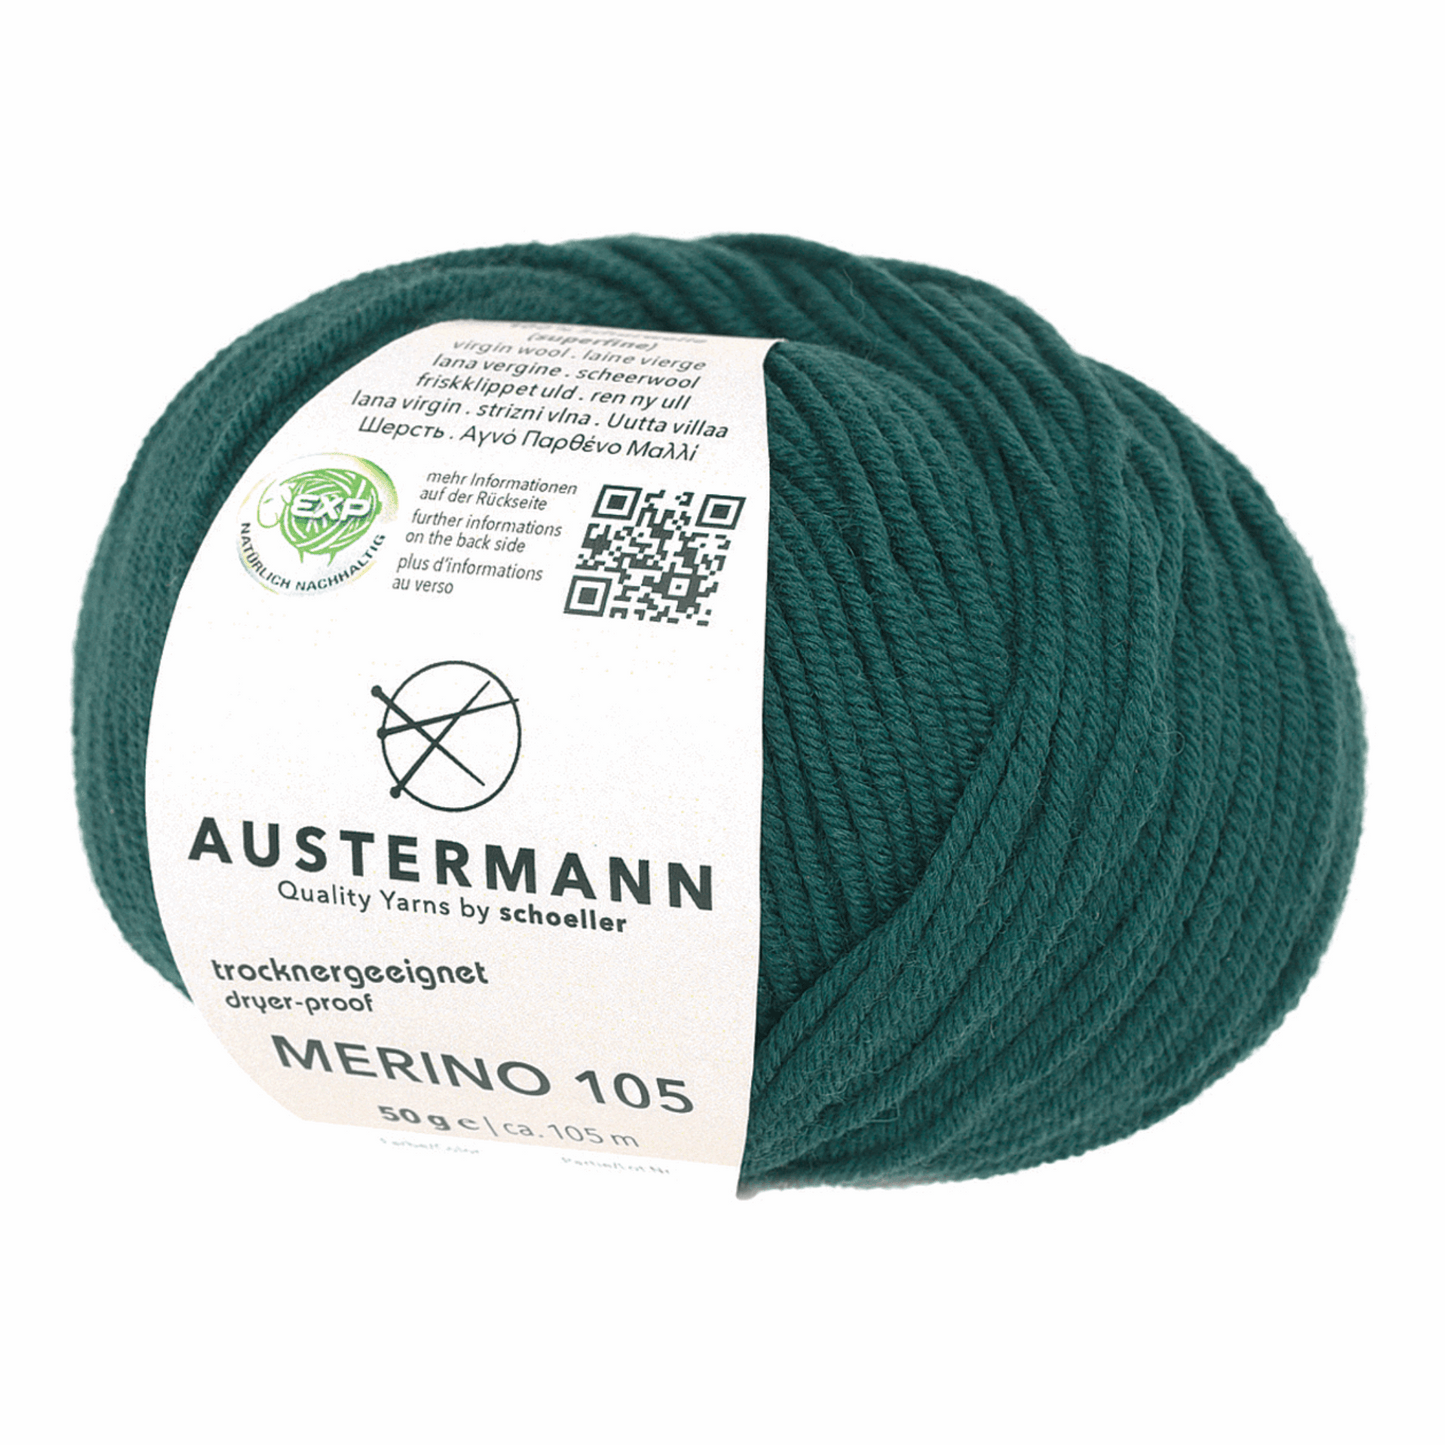 Austermann Merino 105 EXP 50g, 97612, Farbe lorbeer 356